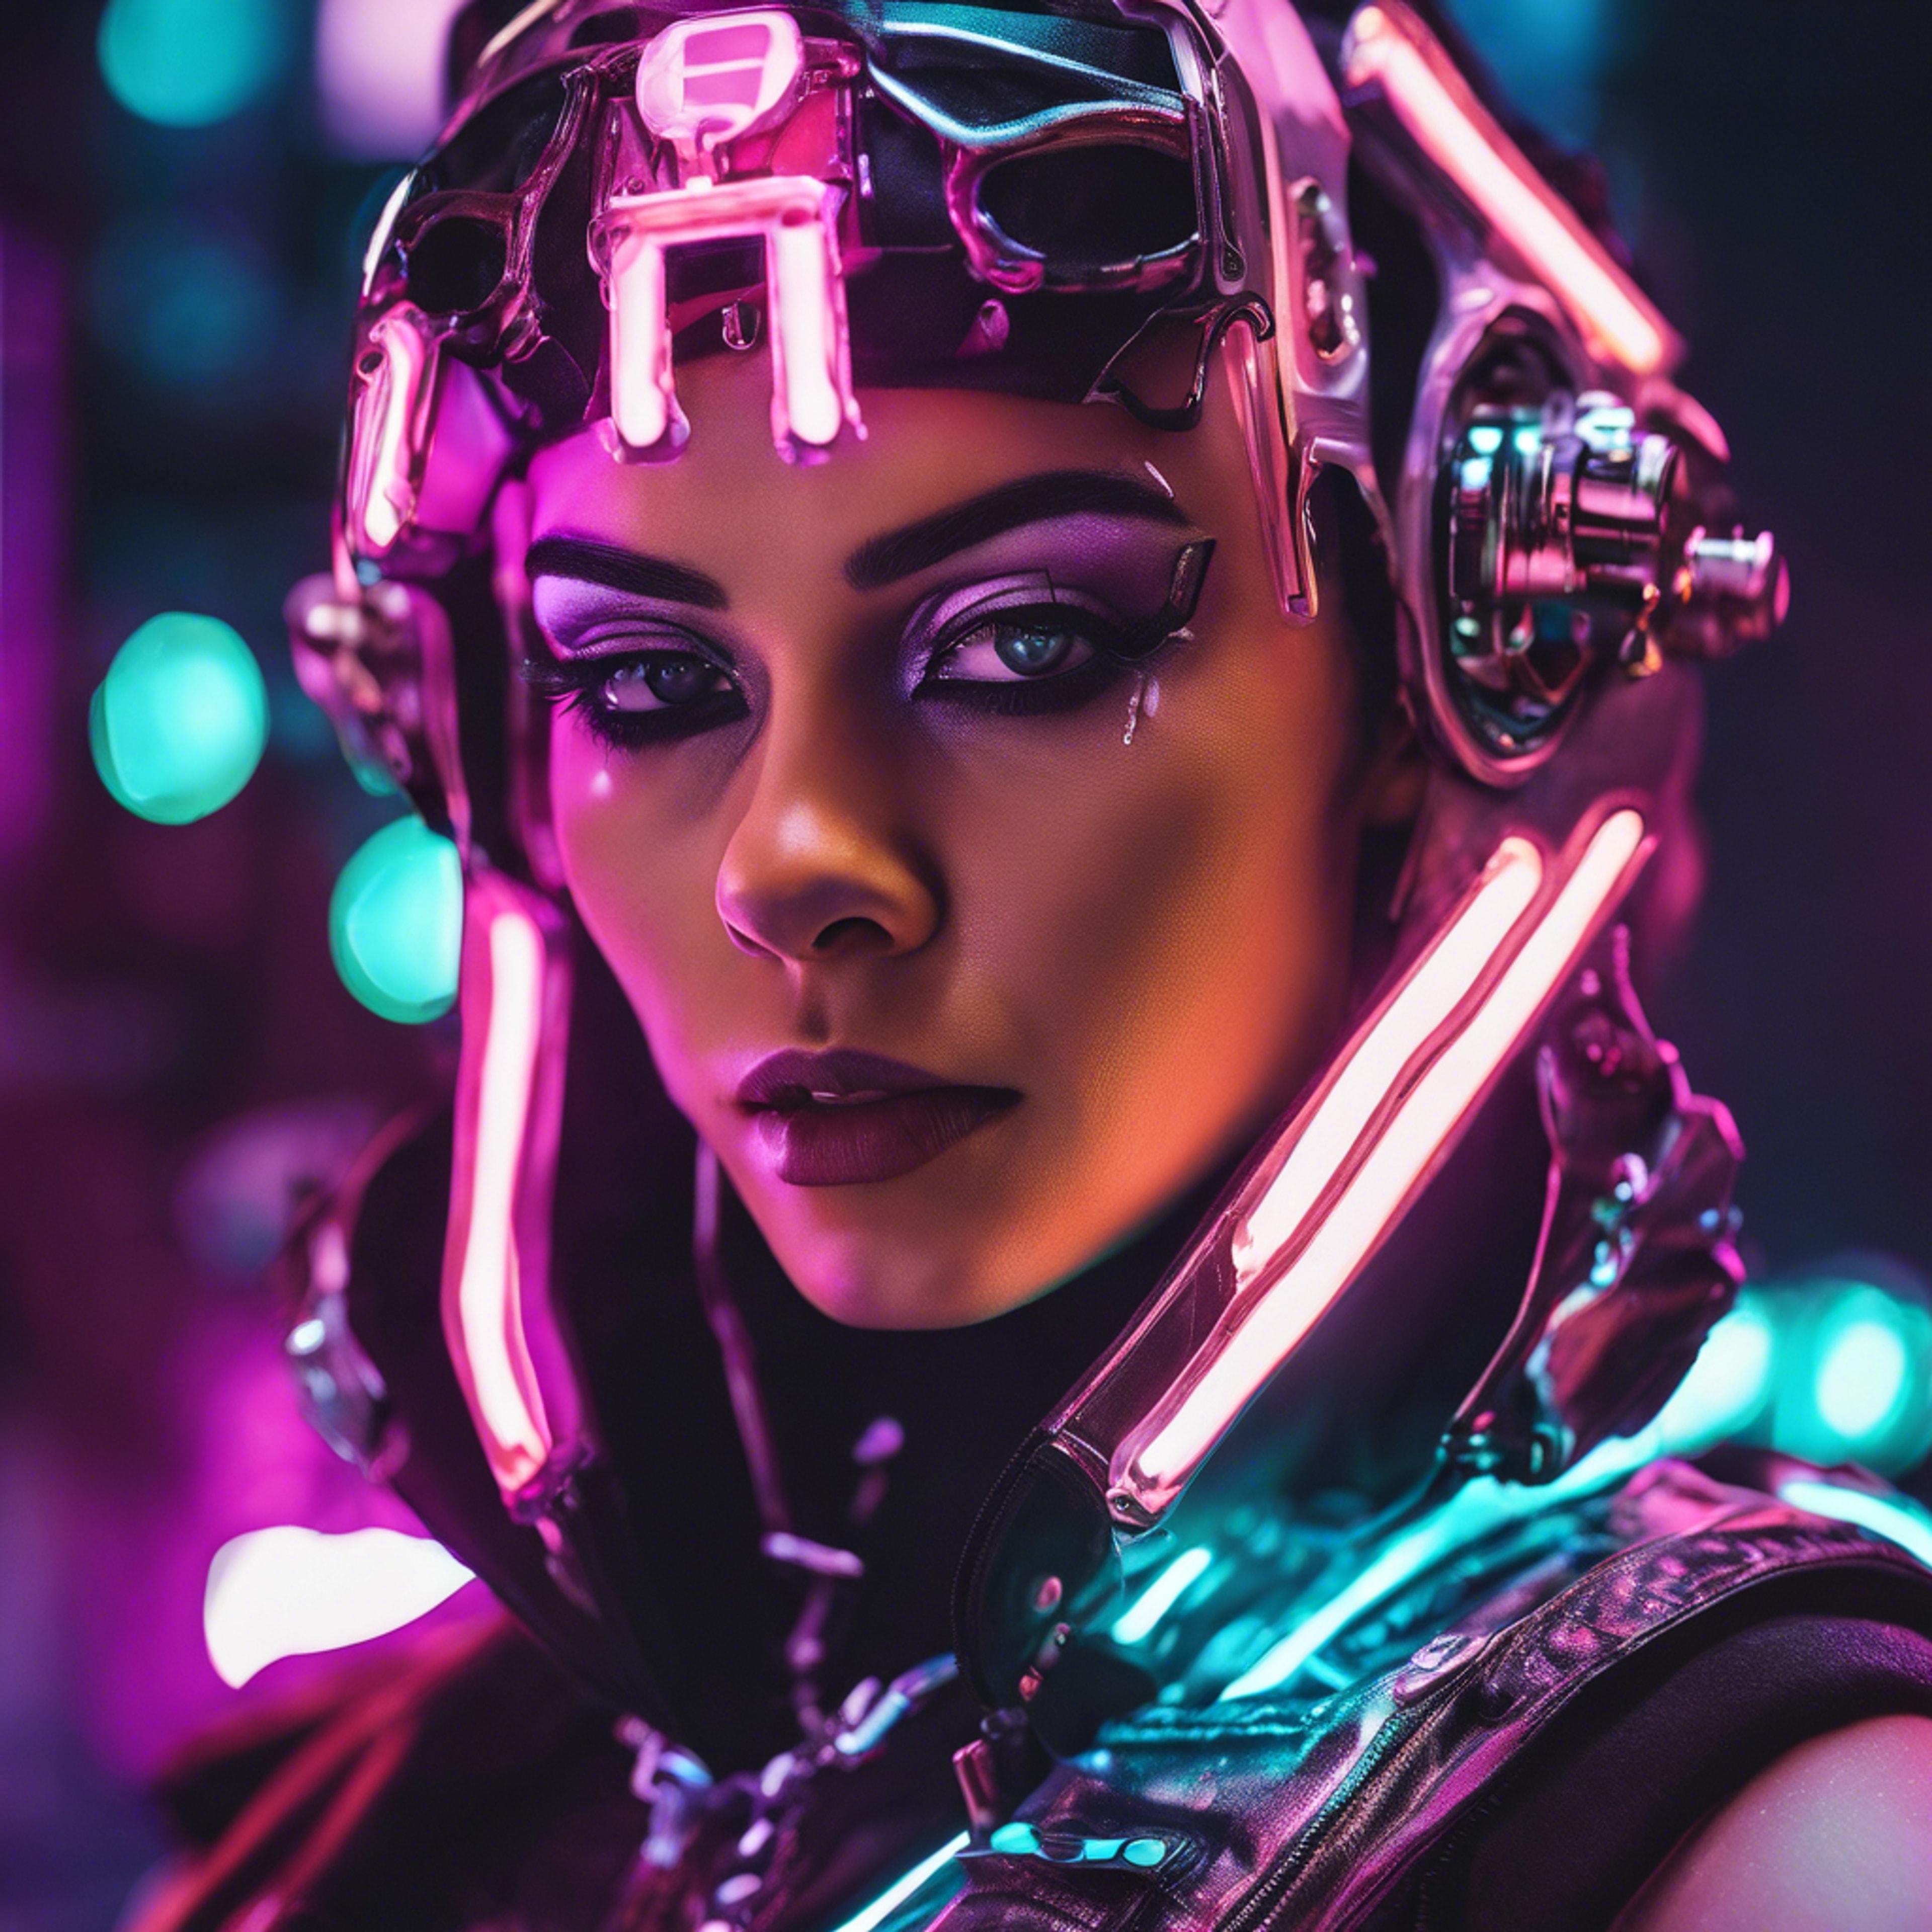 A close-up portrait of a cyberpunk baddie in neon lighting, metal piercings, and sci-fi-inspired makeup. Behang[9ac0123c92044077bebc]